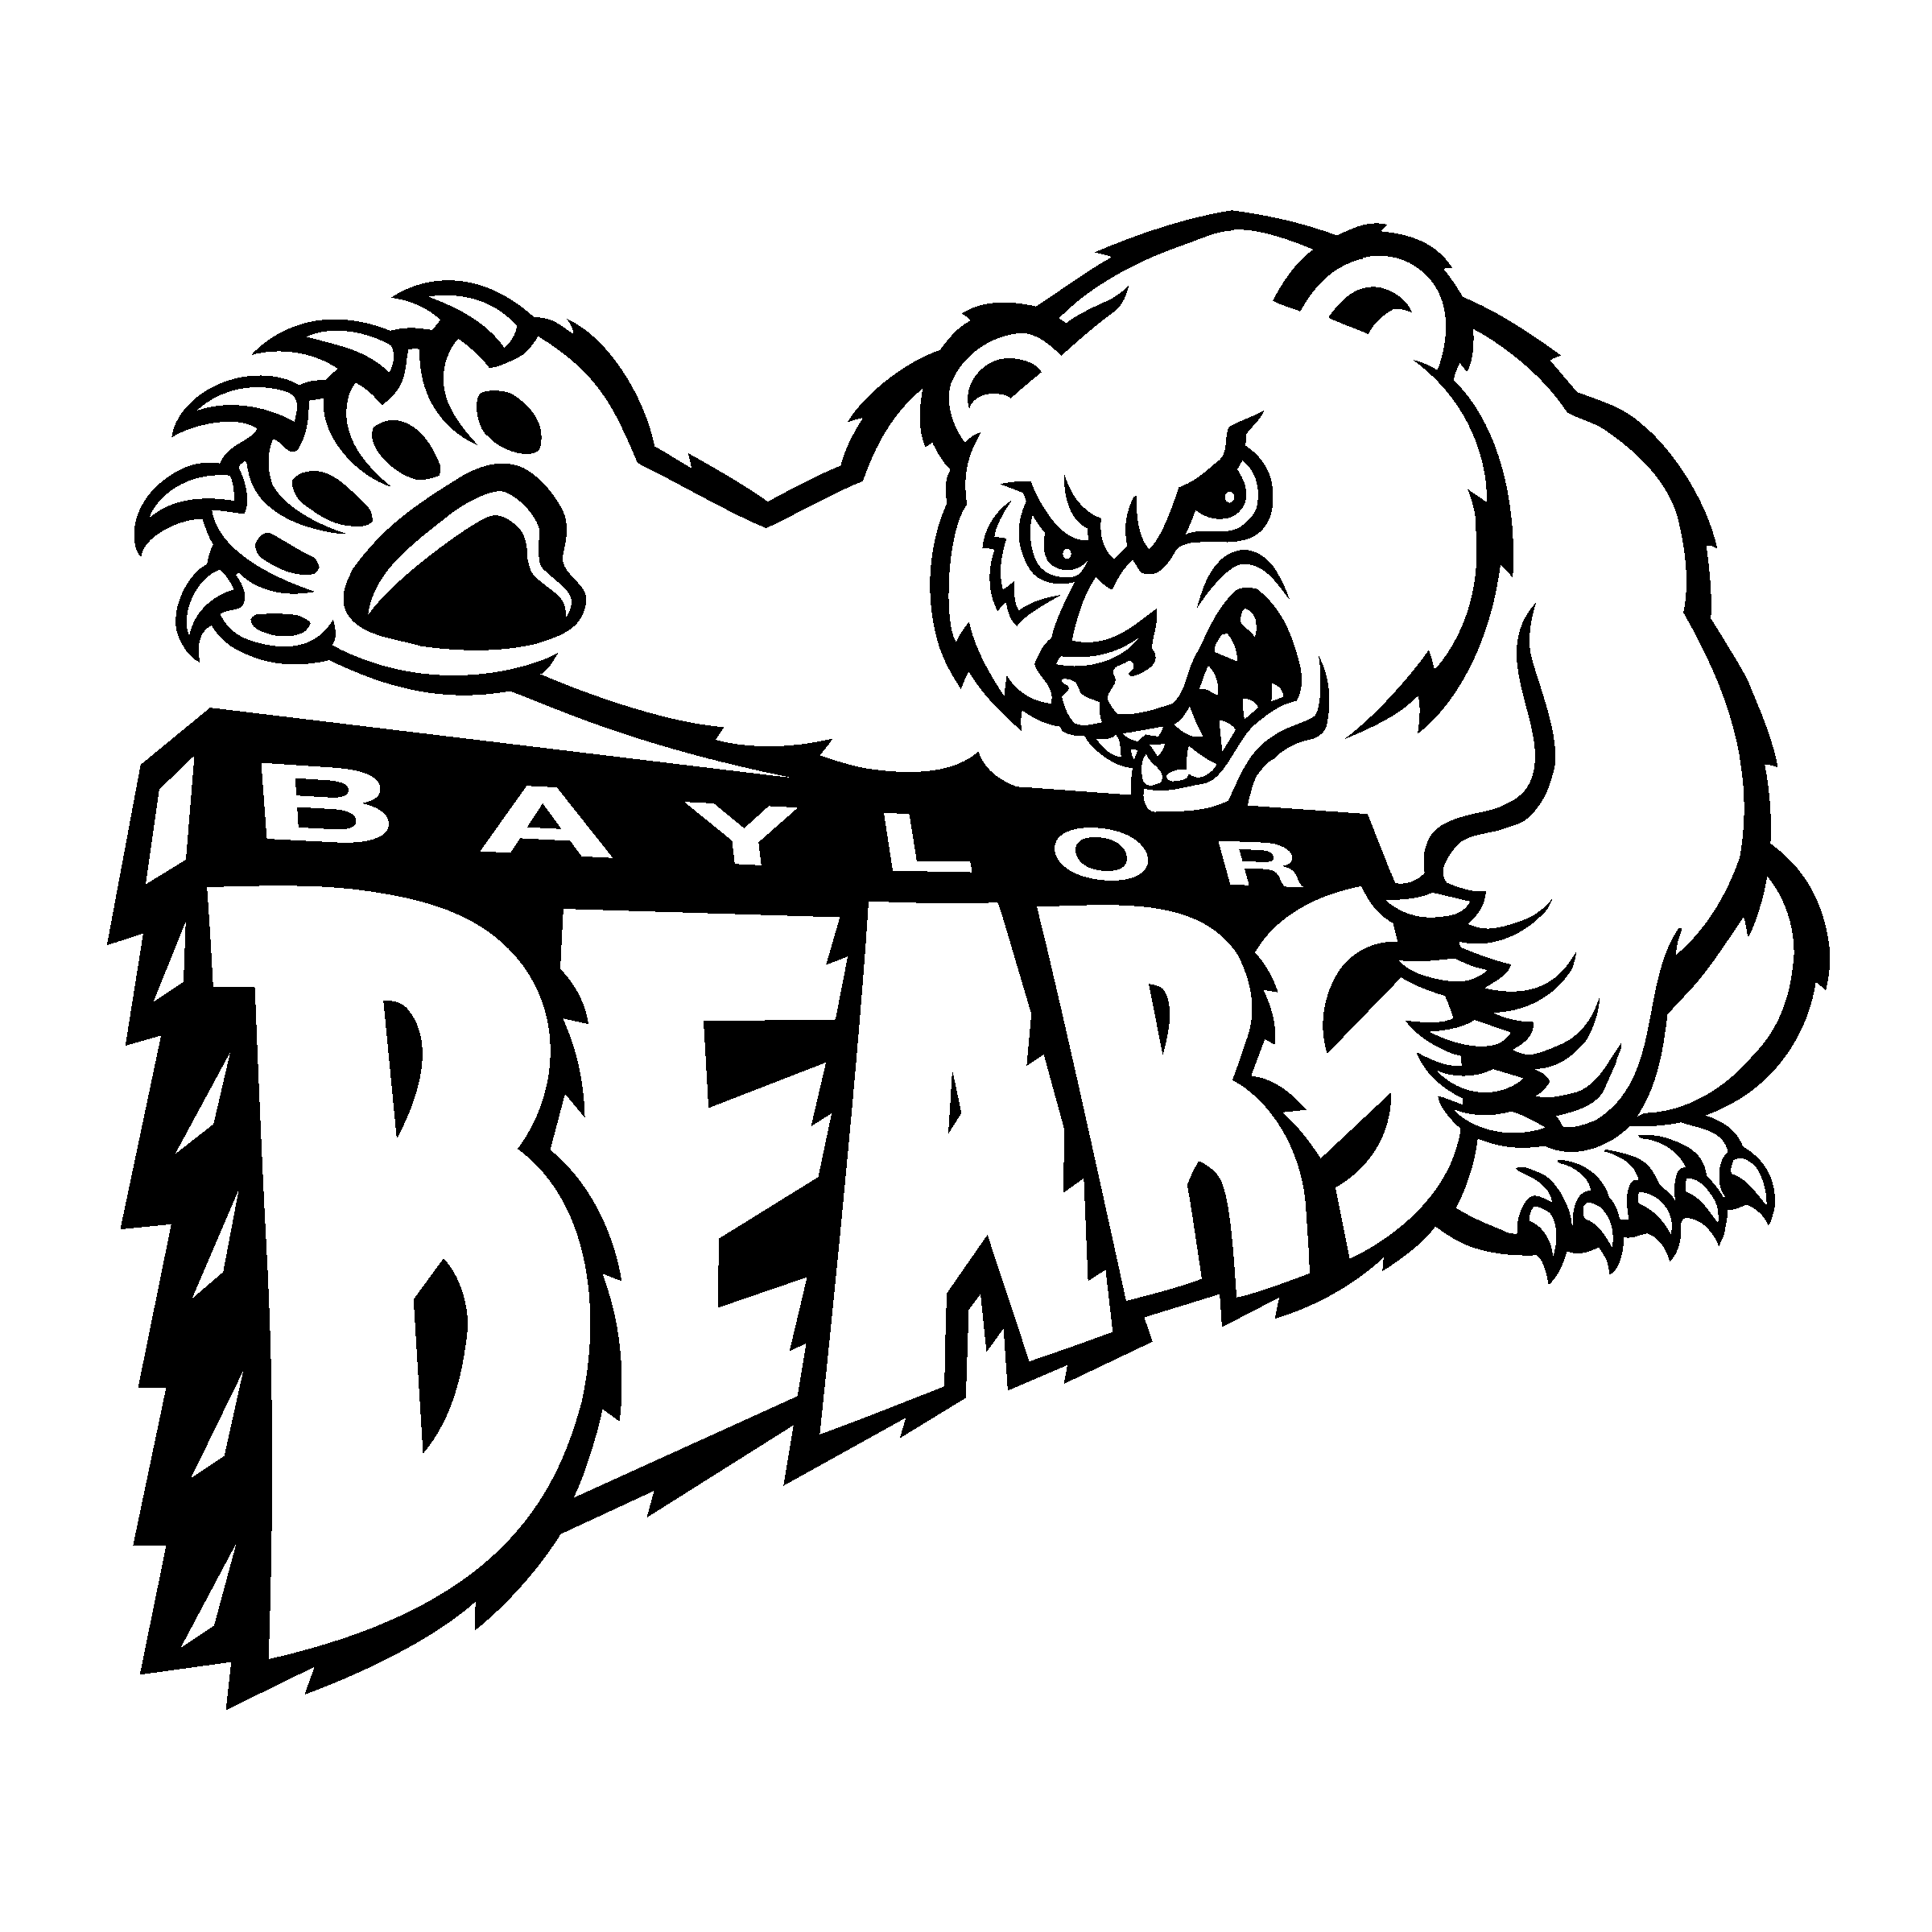 Black and White Bears Logo - Baylor Bears Logo PNG Transparent & SVG Vector - Freebie Supply